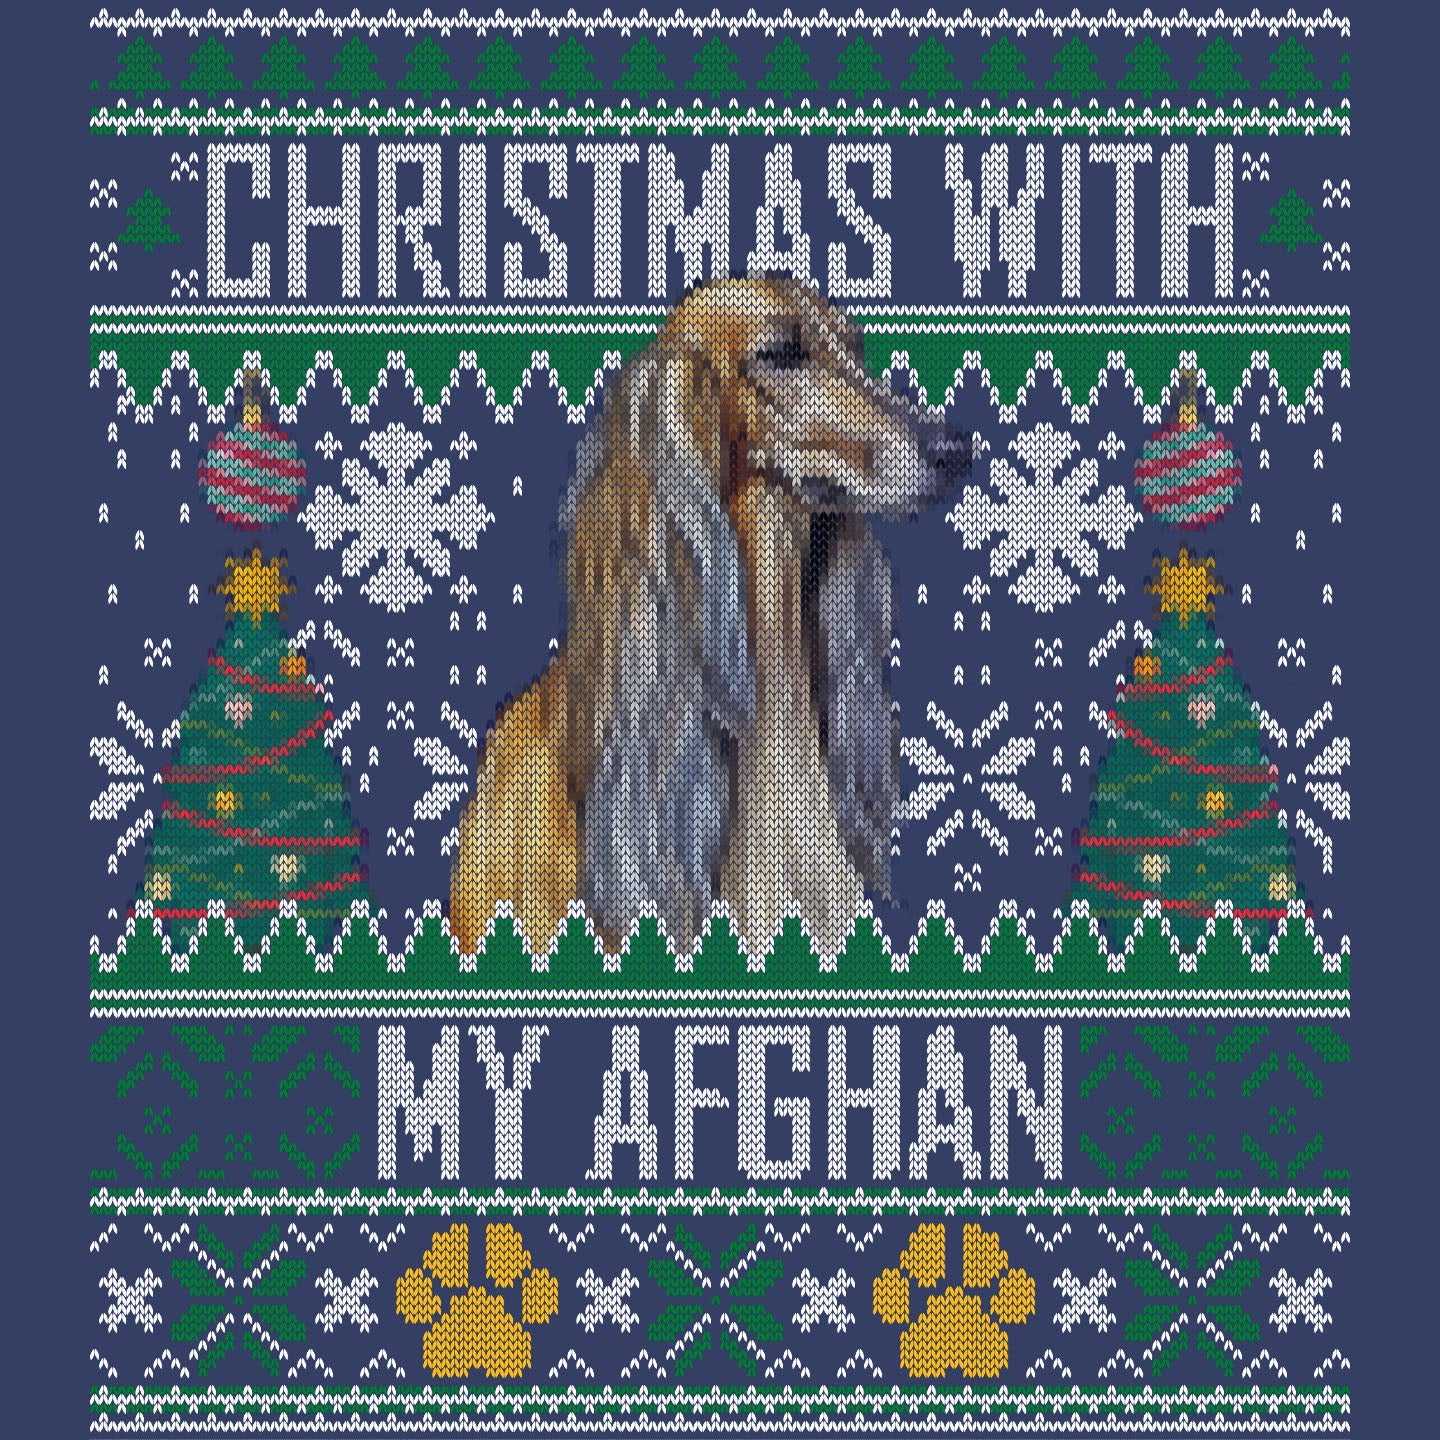 Ugly Sweater Christmas with My Afghan Hound - Adult Unisex Crewneck Sweatshirt